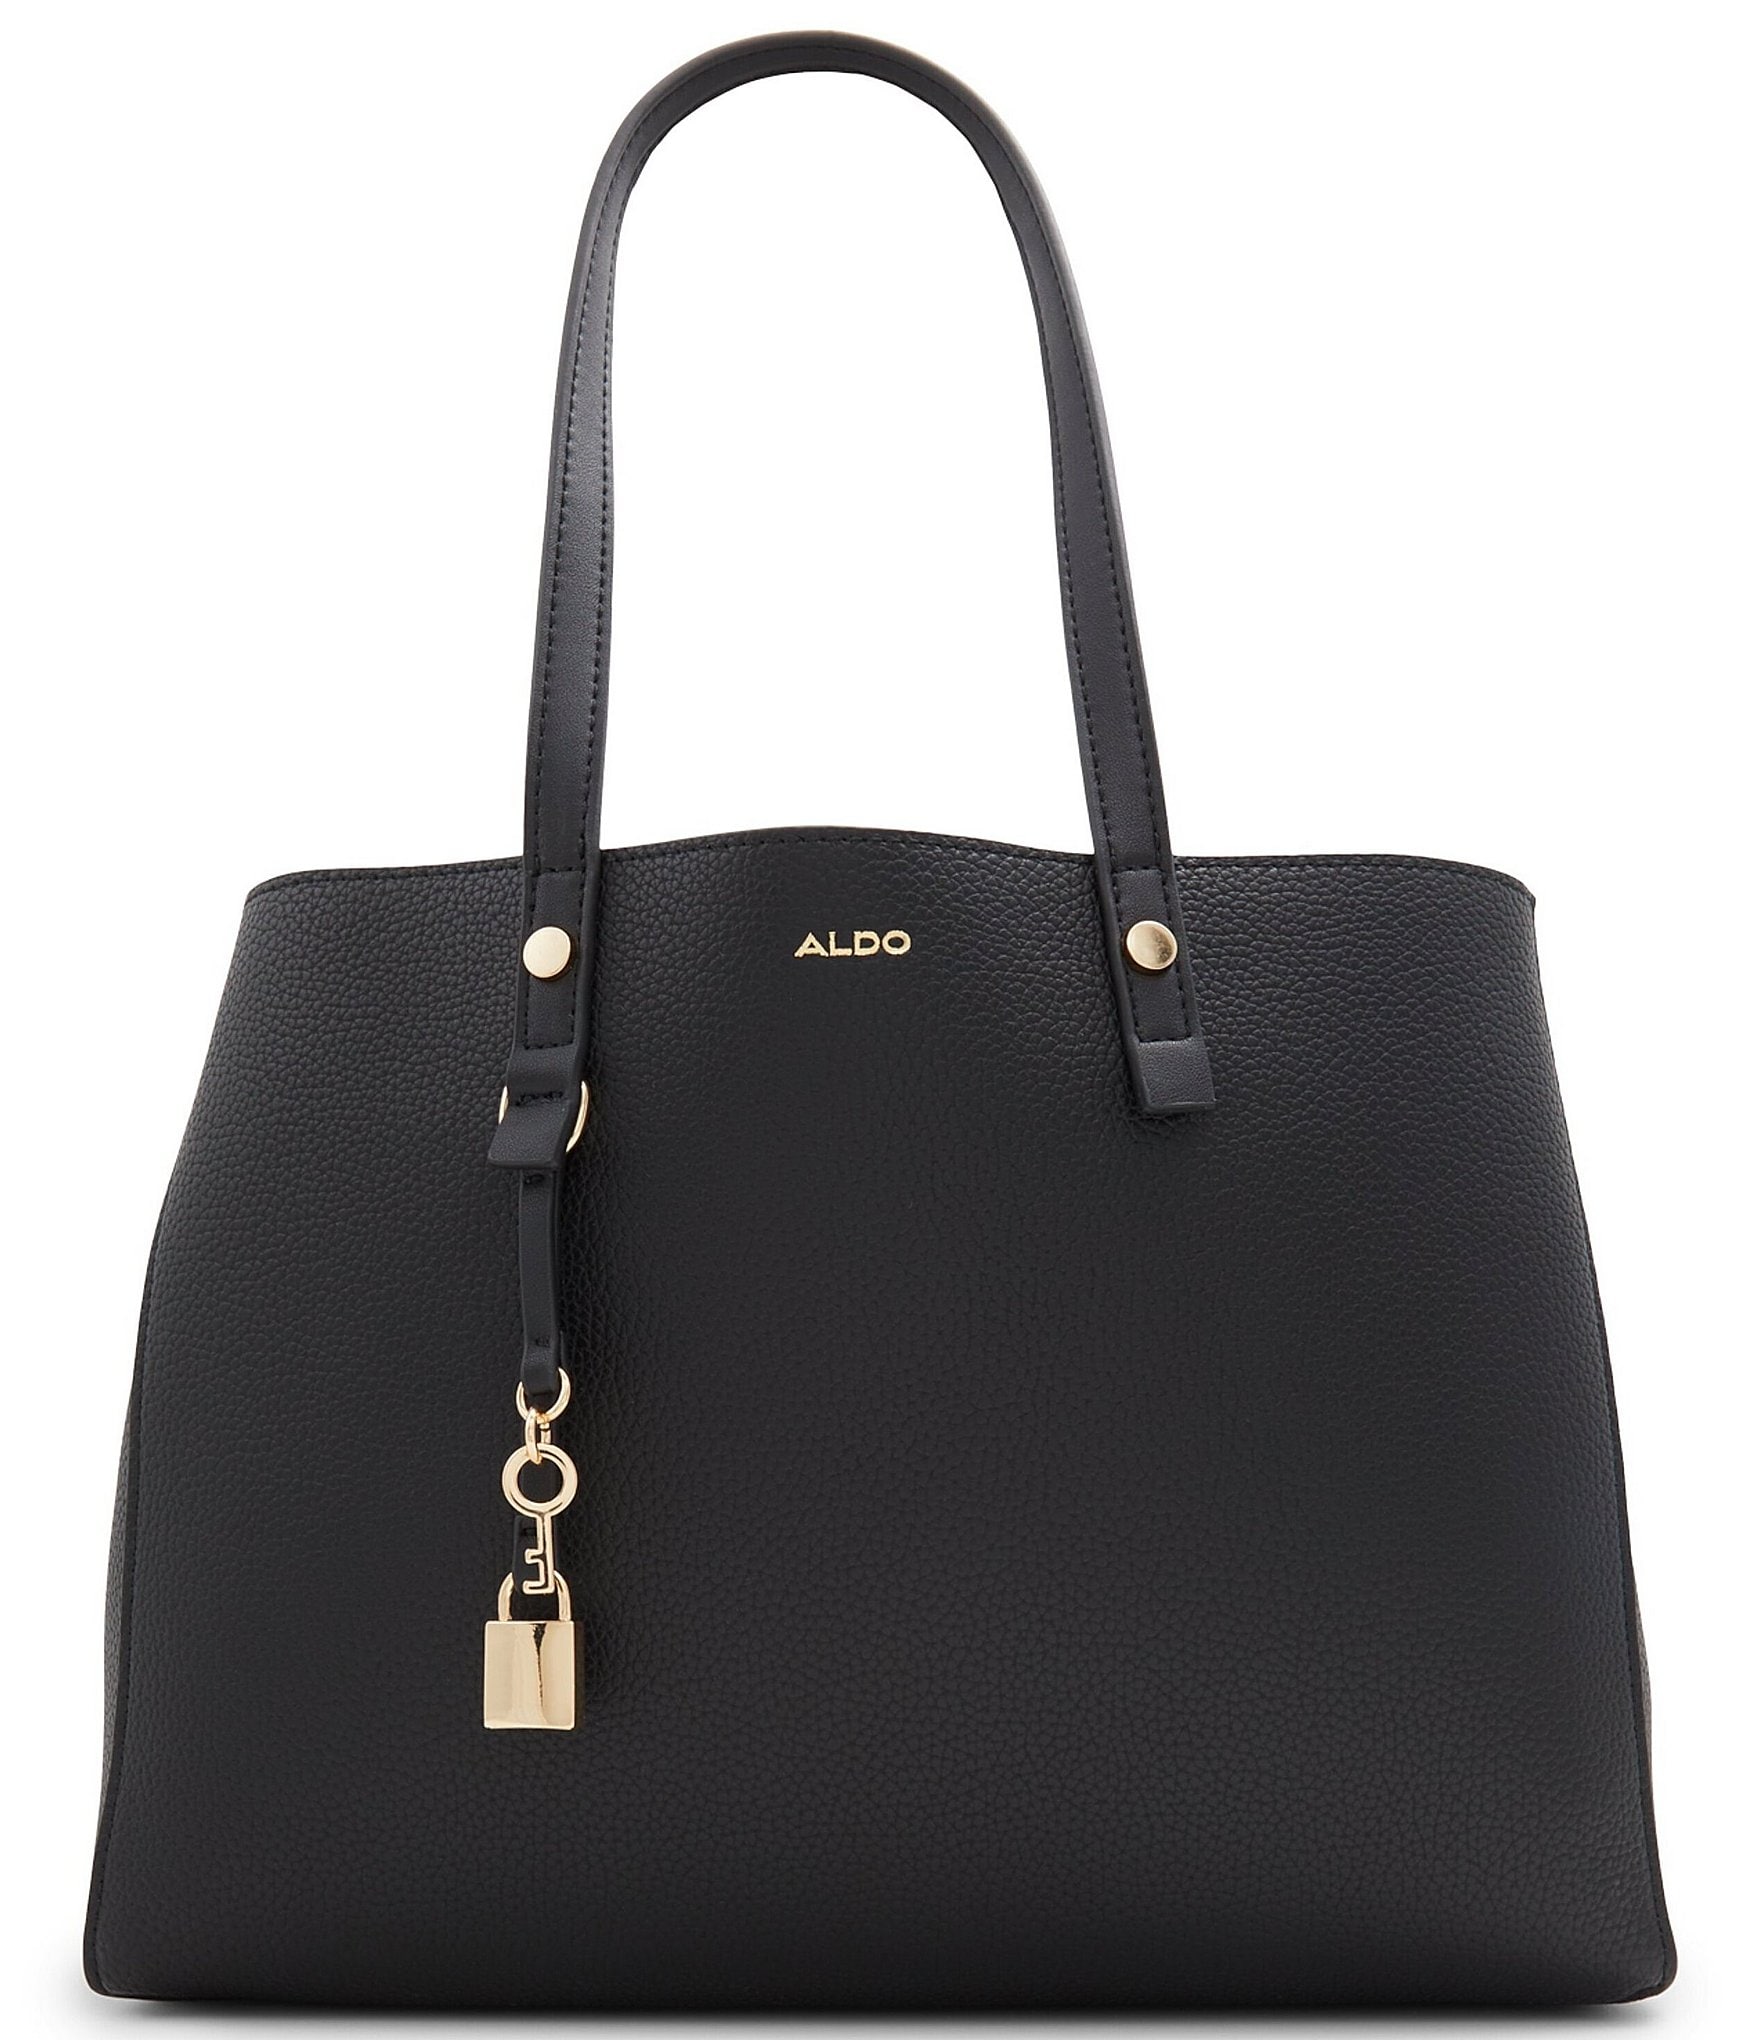 ALDO Women's Dreiddaa Tote Bag, Black/White : Clothing, Shoes & Jewelry -  Amazon.com